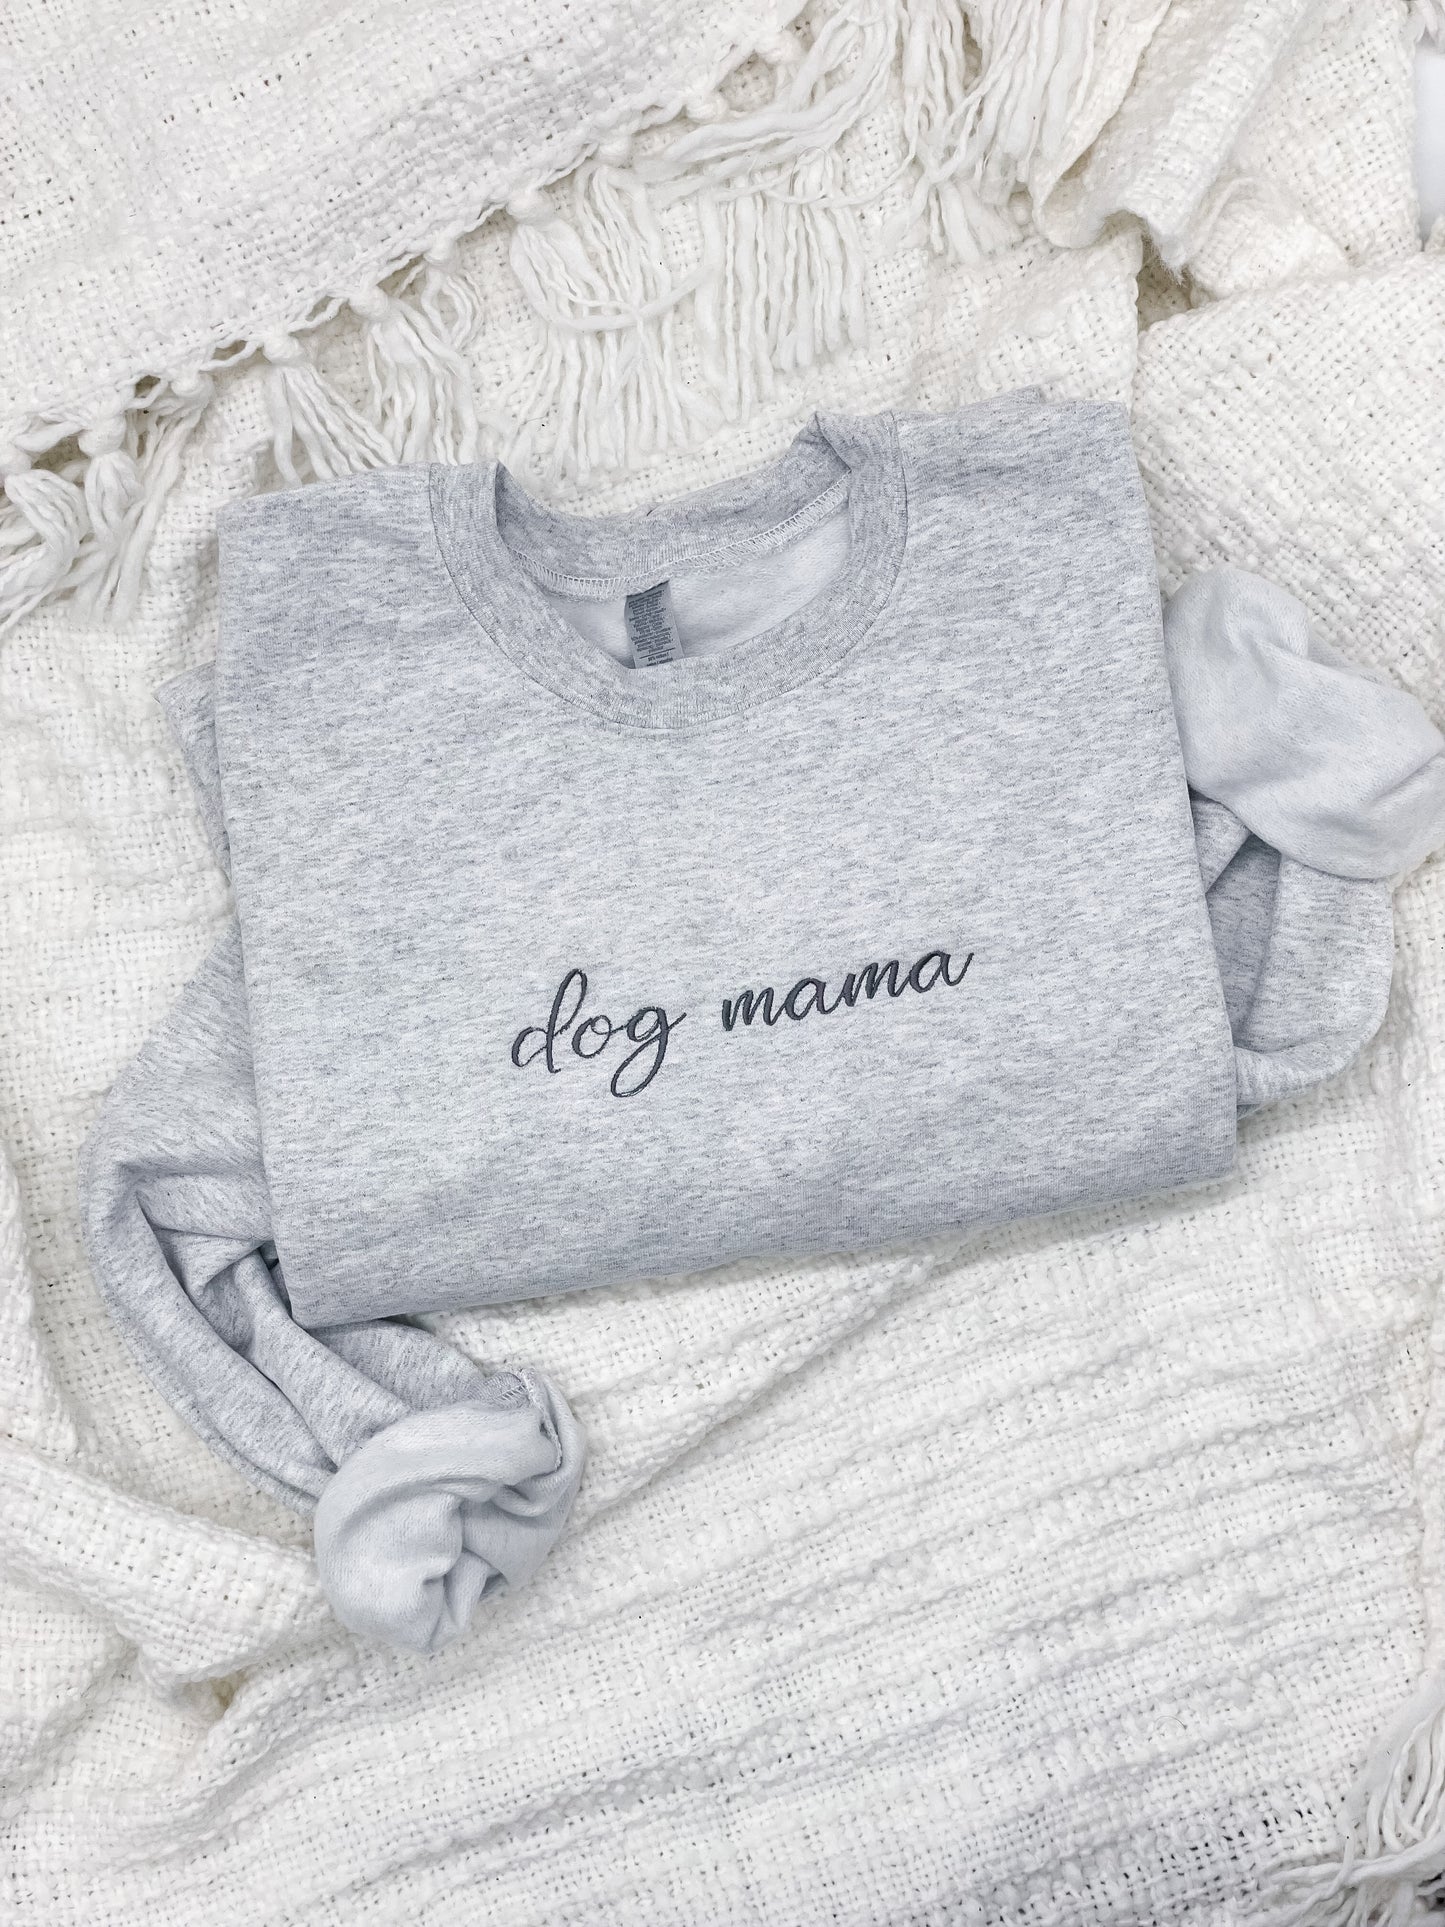 Dog mama| Embroidered Hoodie & Sweatshirt